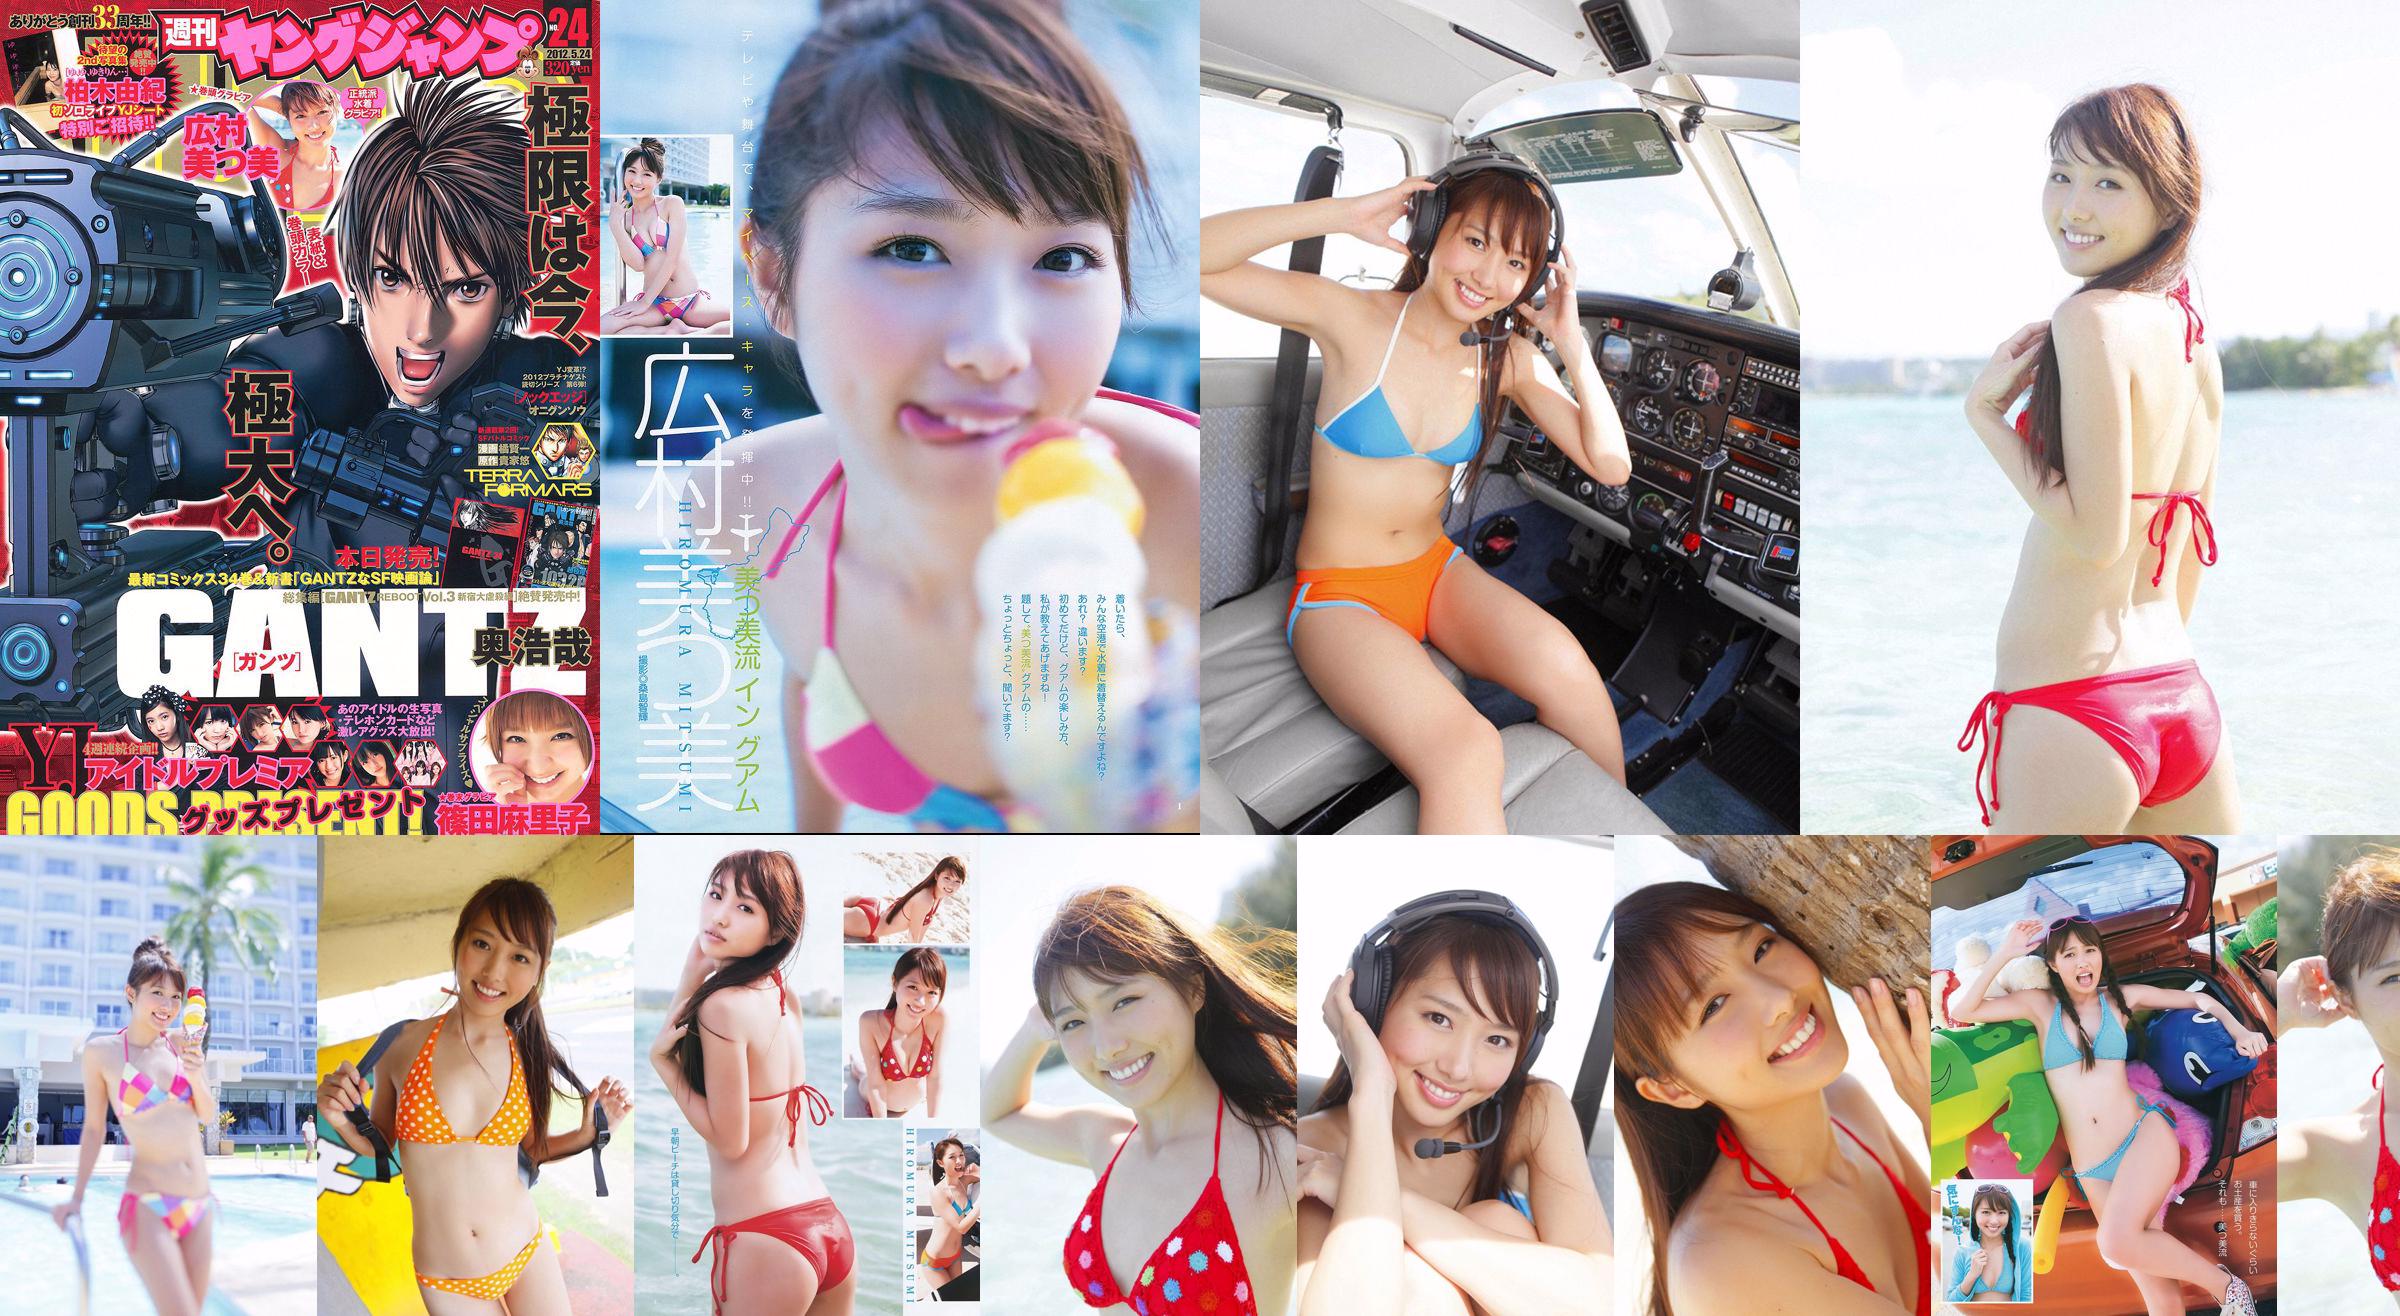 Mitsumi Hiromura Mariko Shinoda [Wekelijkse Young Jump] 2012 No.24 Photo Magazine No.545572 Pagina 1